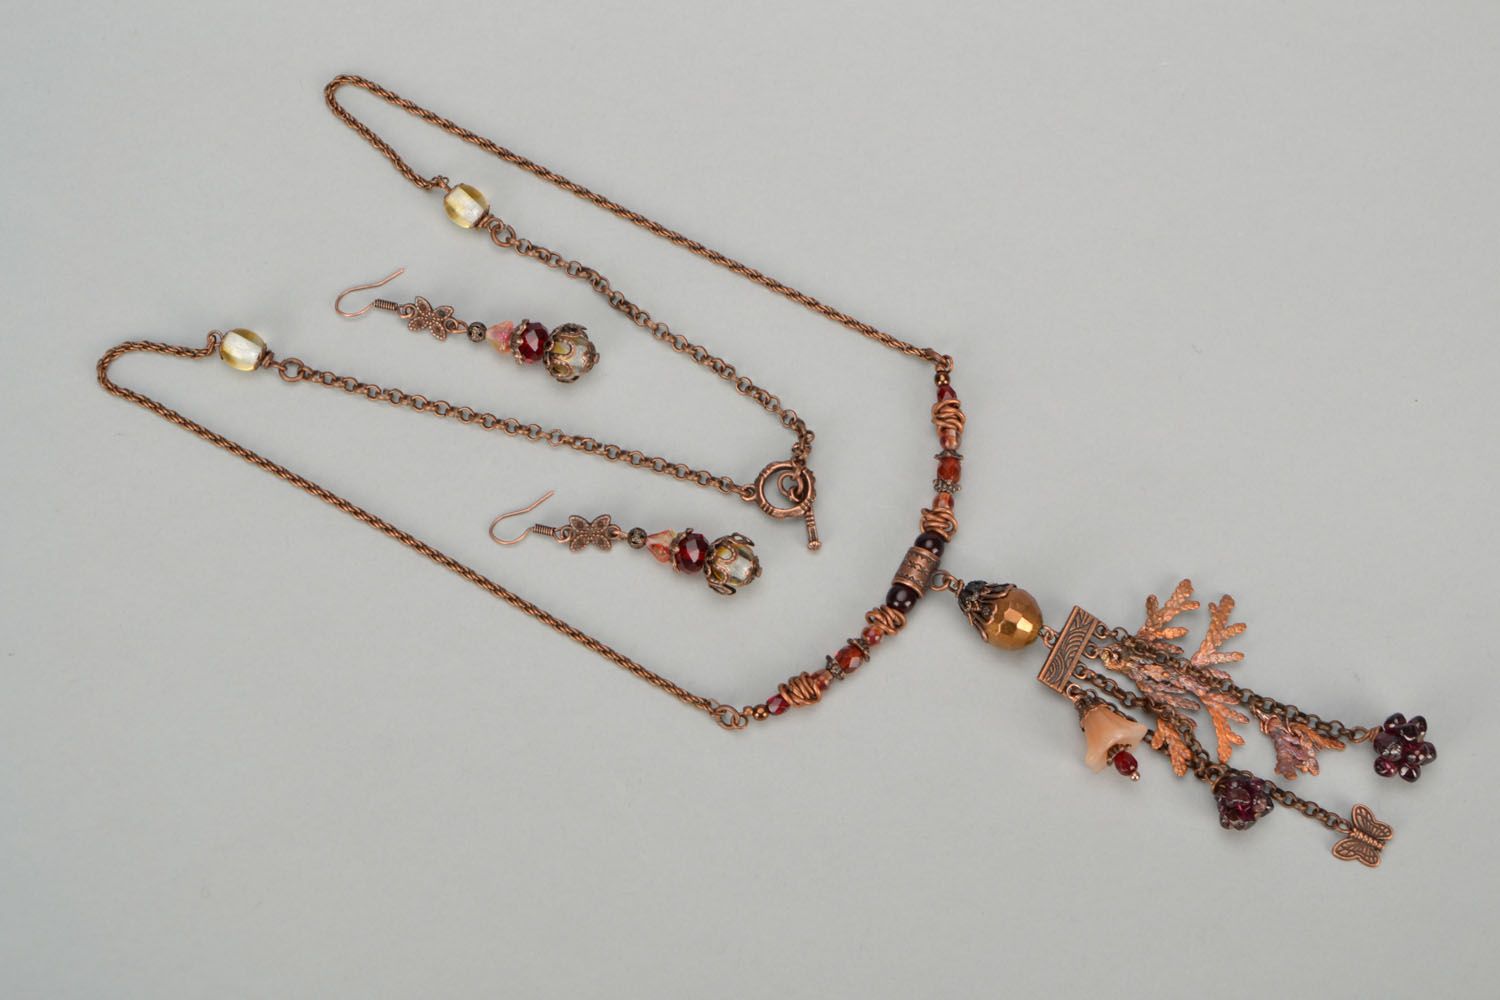 Pendant and earrings made using galvanizing method photo 3